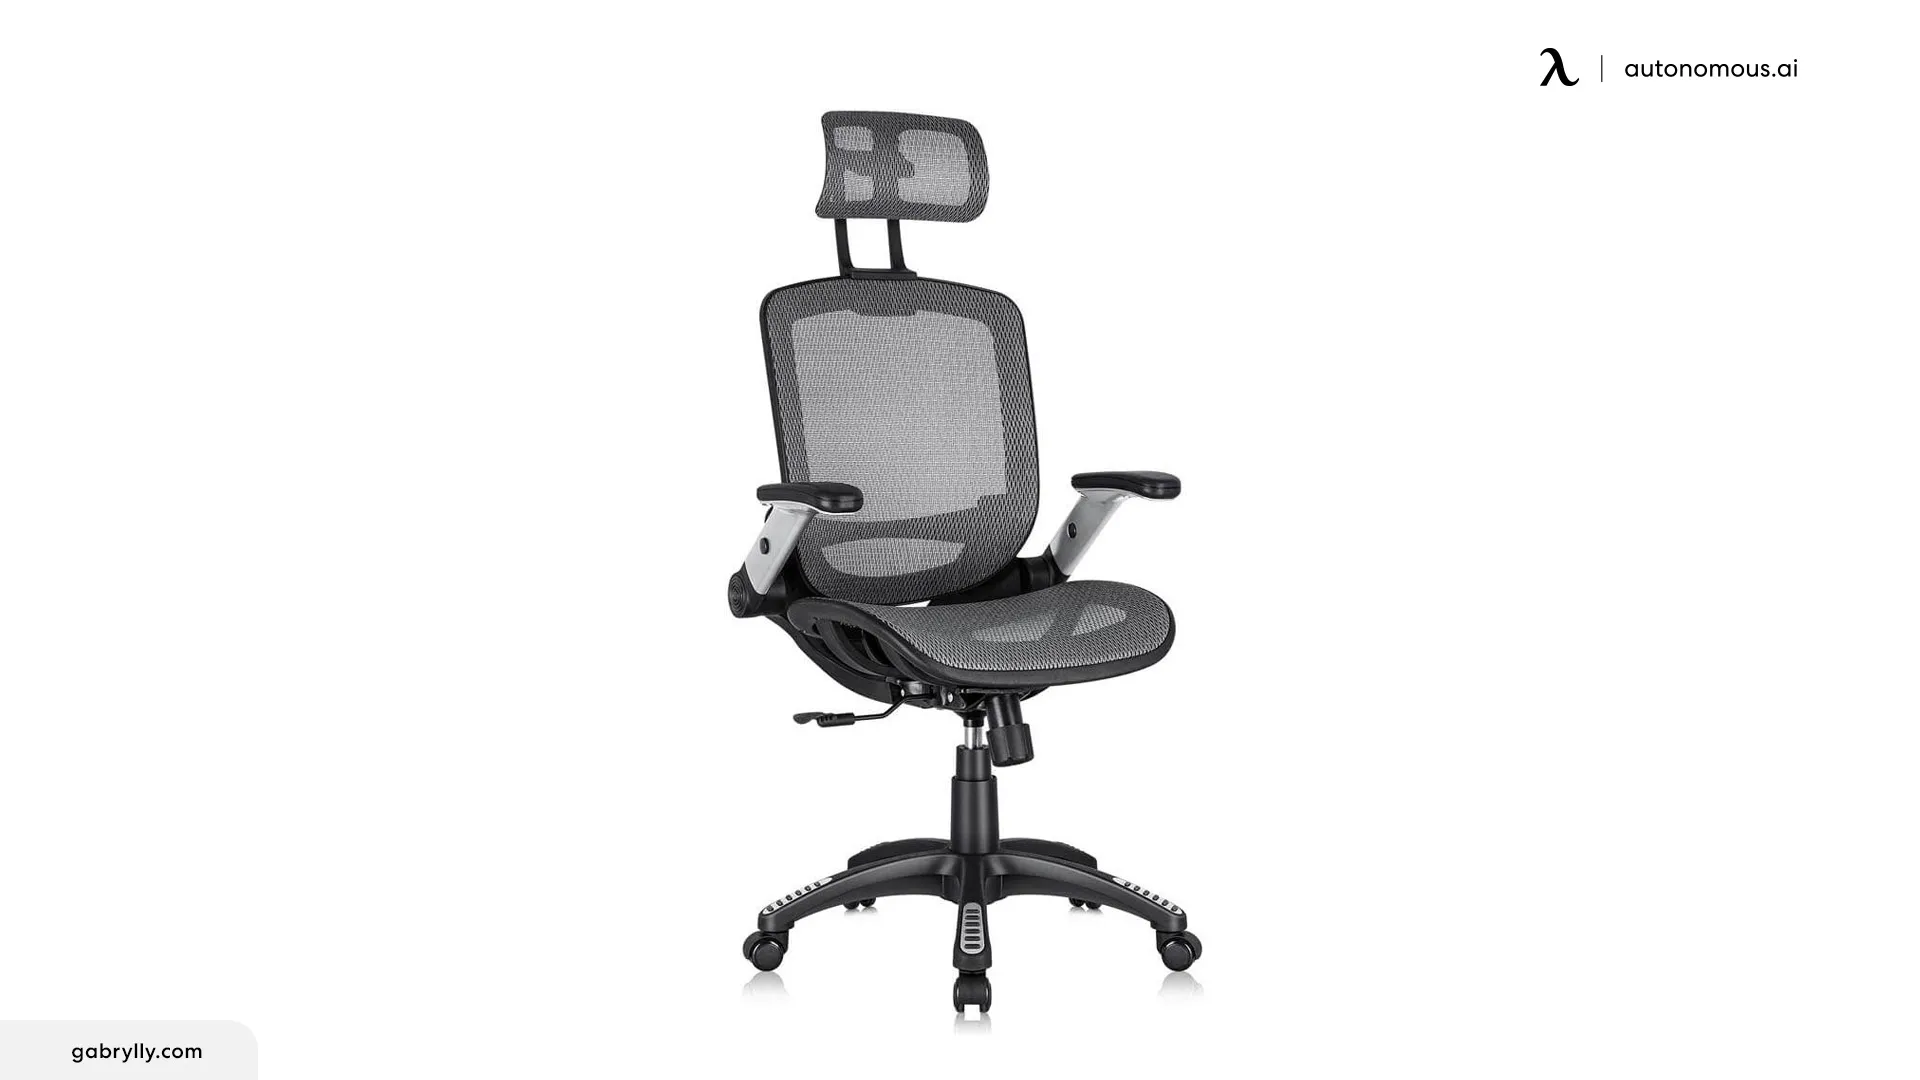 GABRYLLY Ergonomic Office Chair